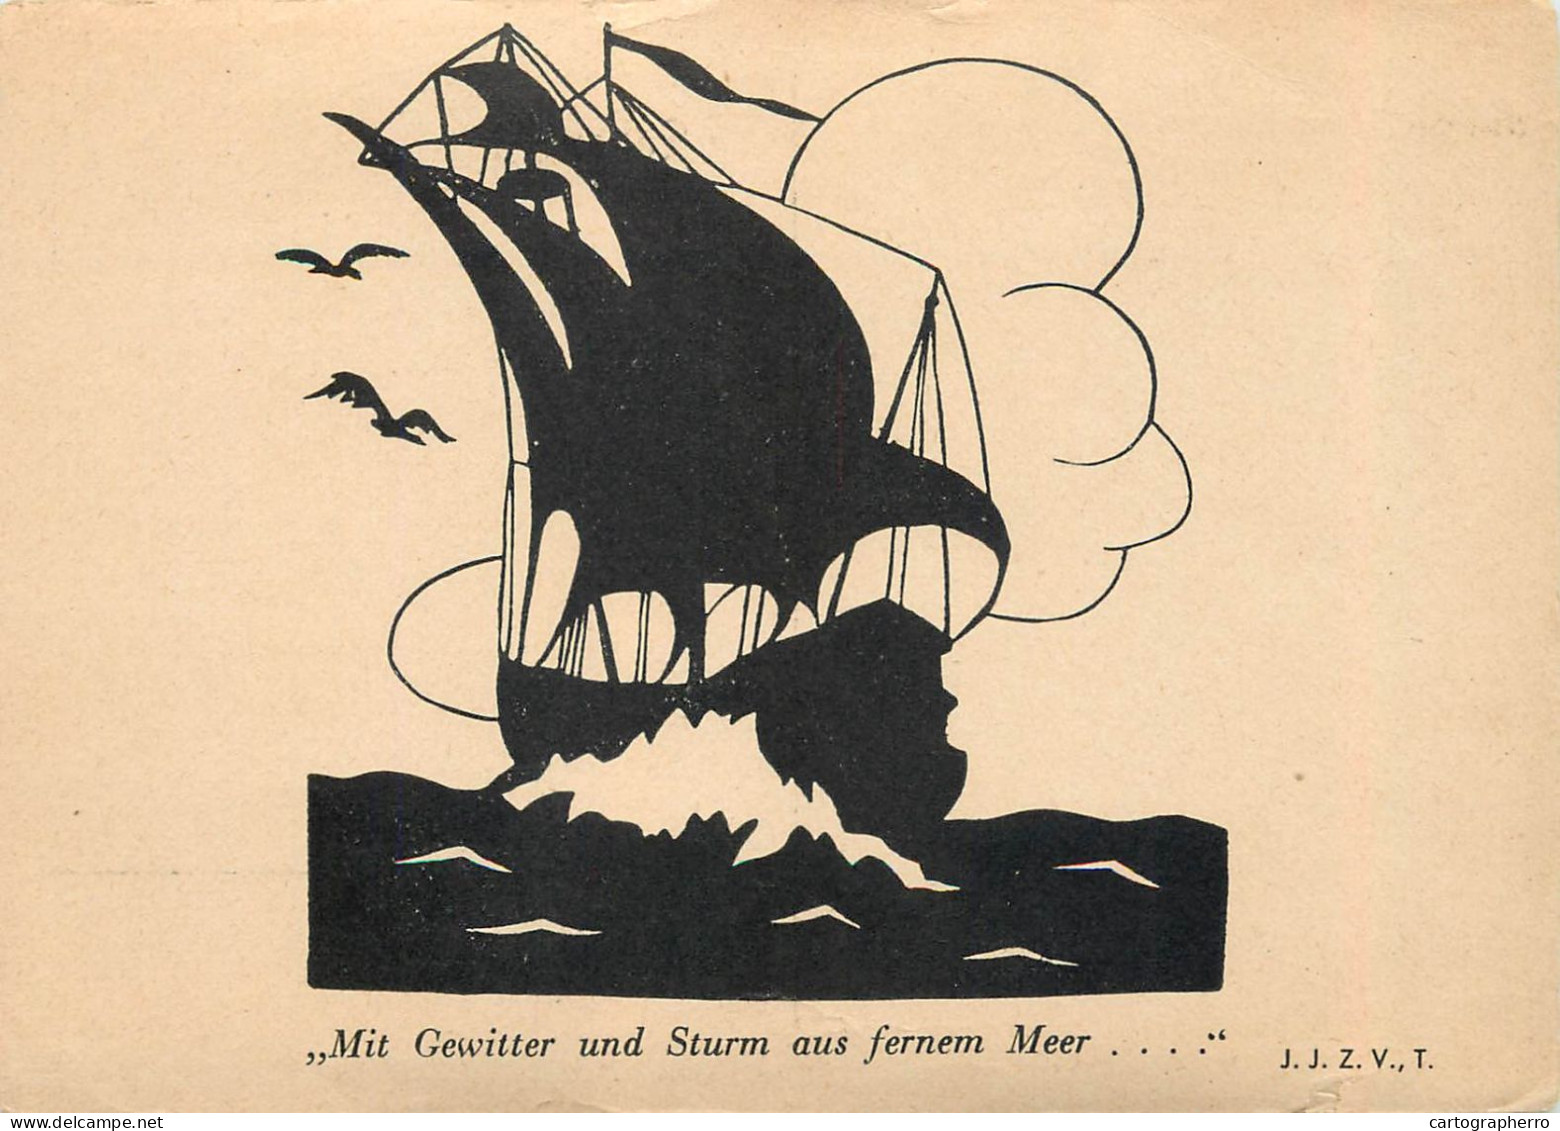 Navigation Sailing Vessels & Boats Themed Postcard Mit Gewitter Und Sturm Aus Fernem Meer - Segelboote